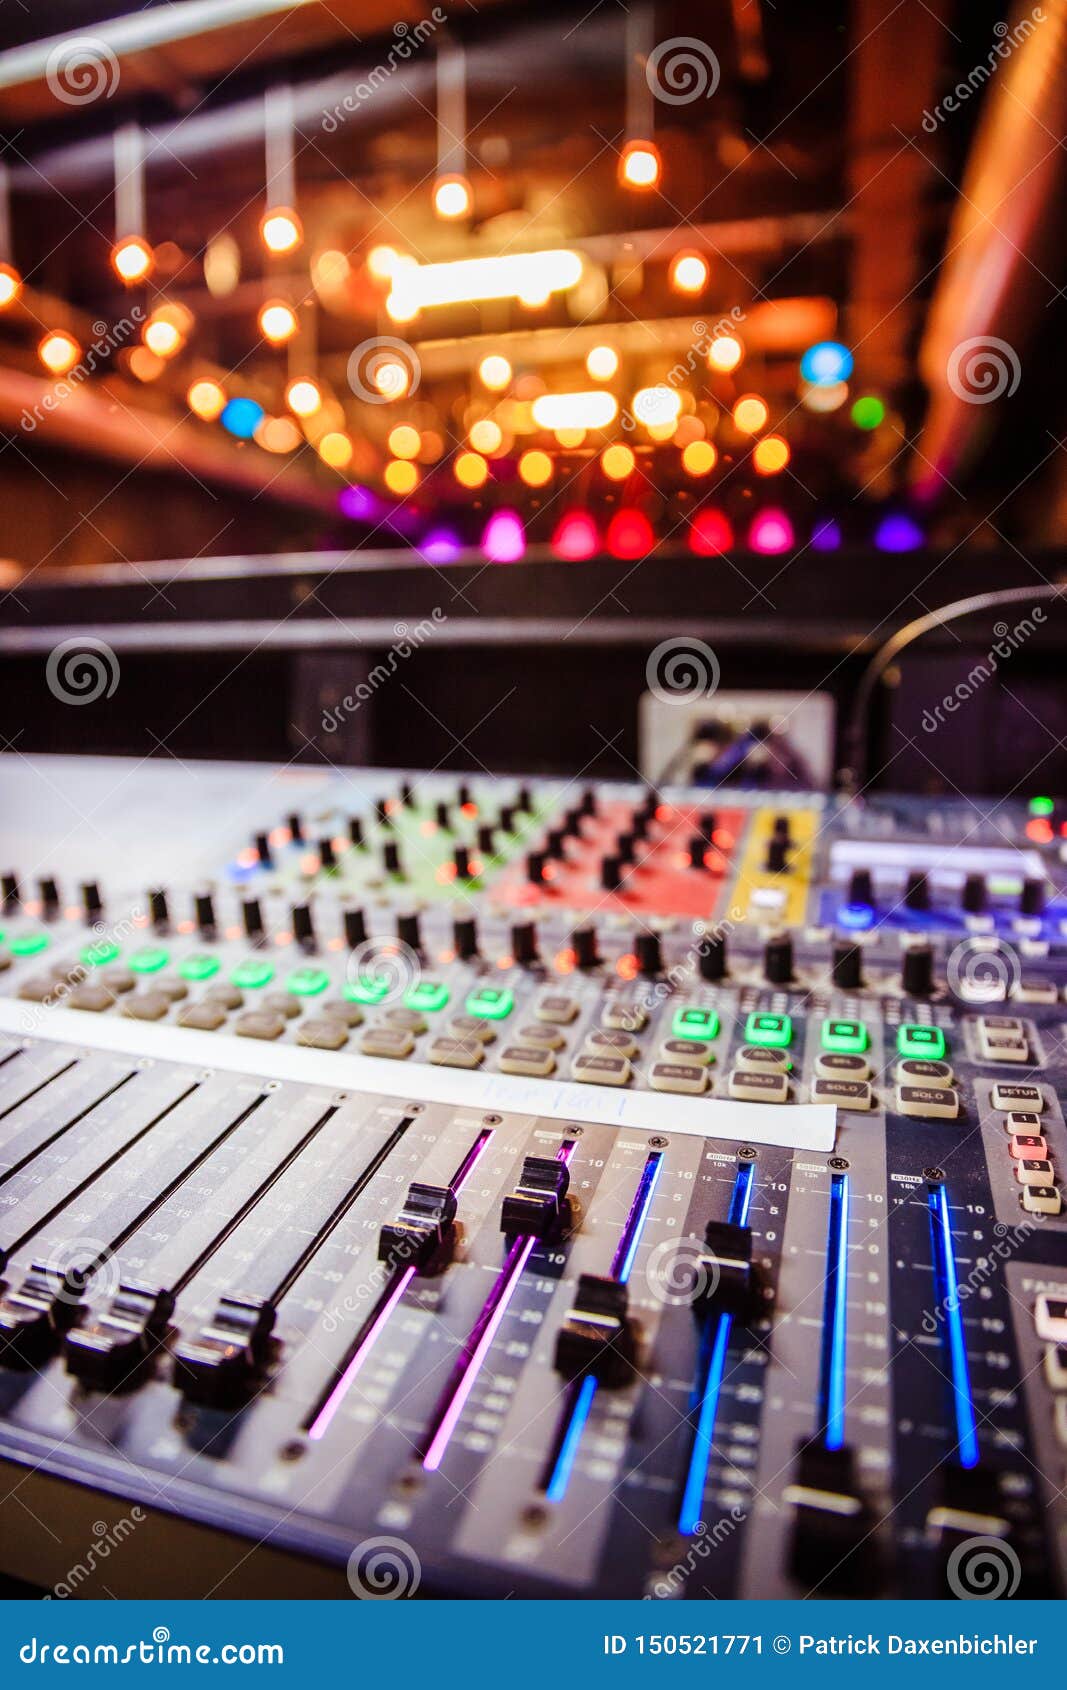 Sound Recording Studio Mixer Desk At A Concert Professional Music